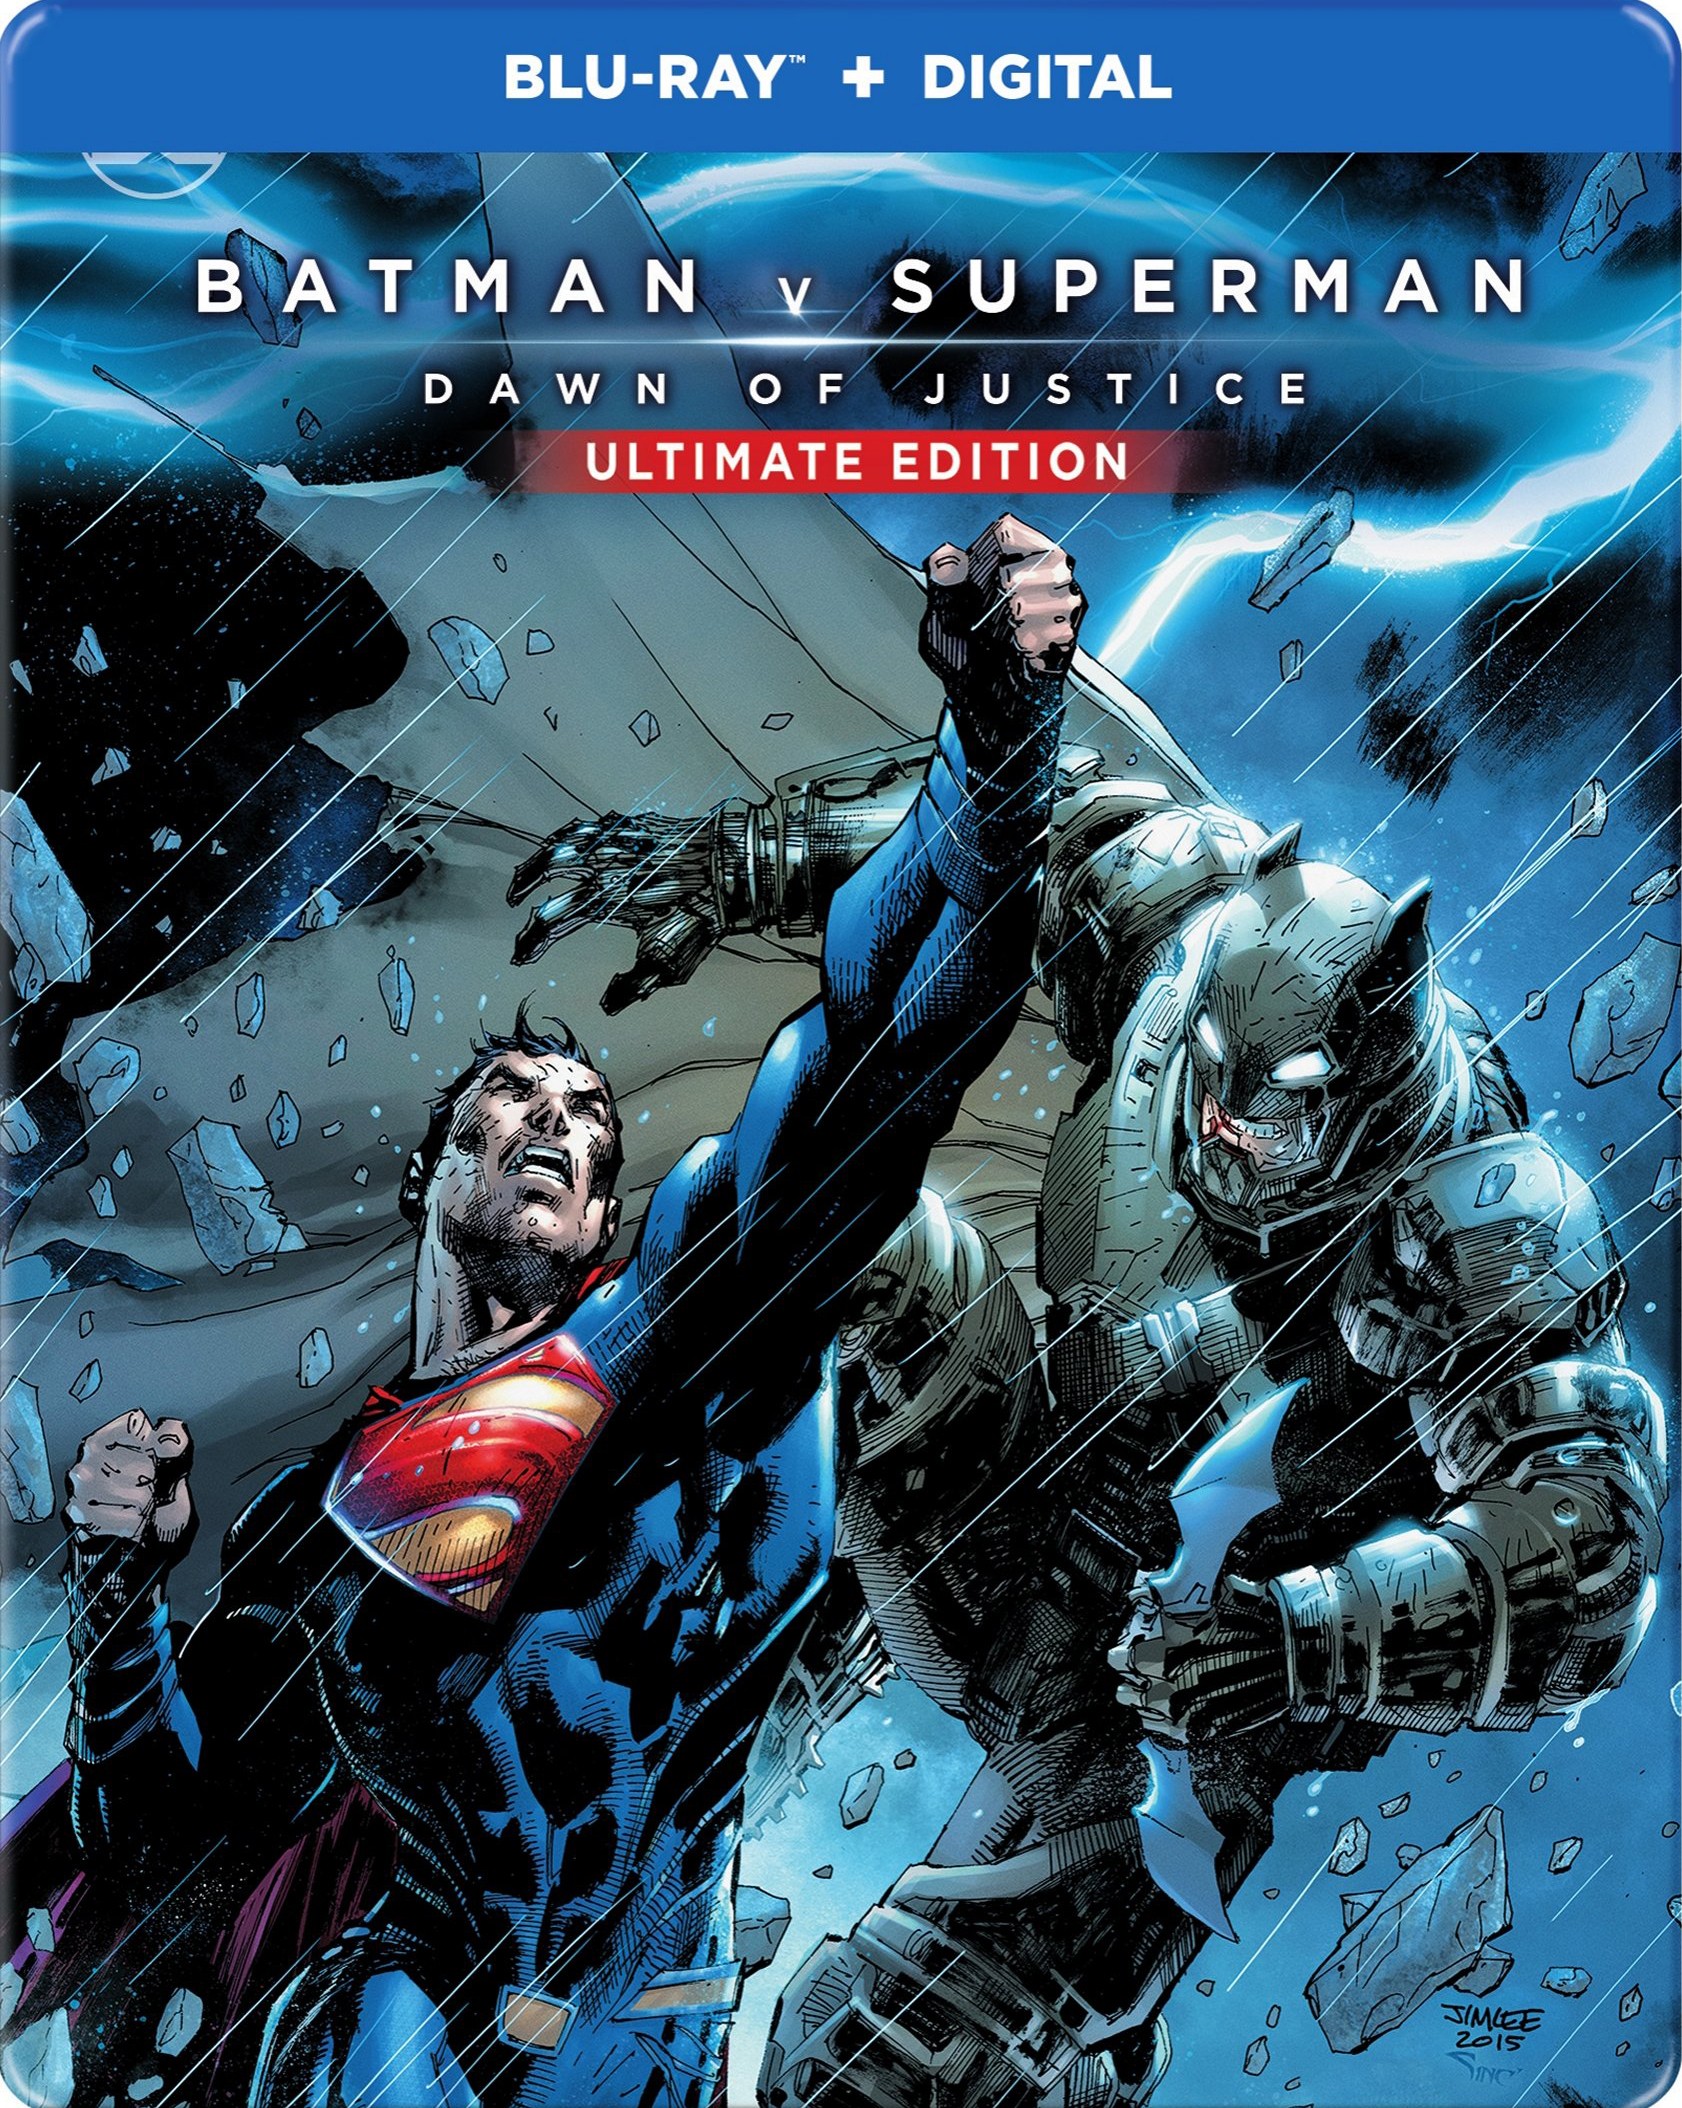 Arriba 42+ imagen batman v superman dawn of justice blu ray steelbook